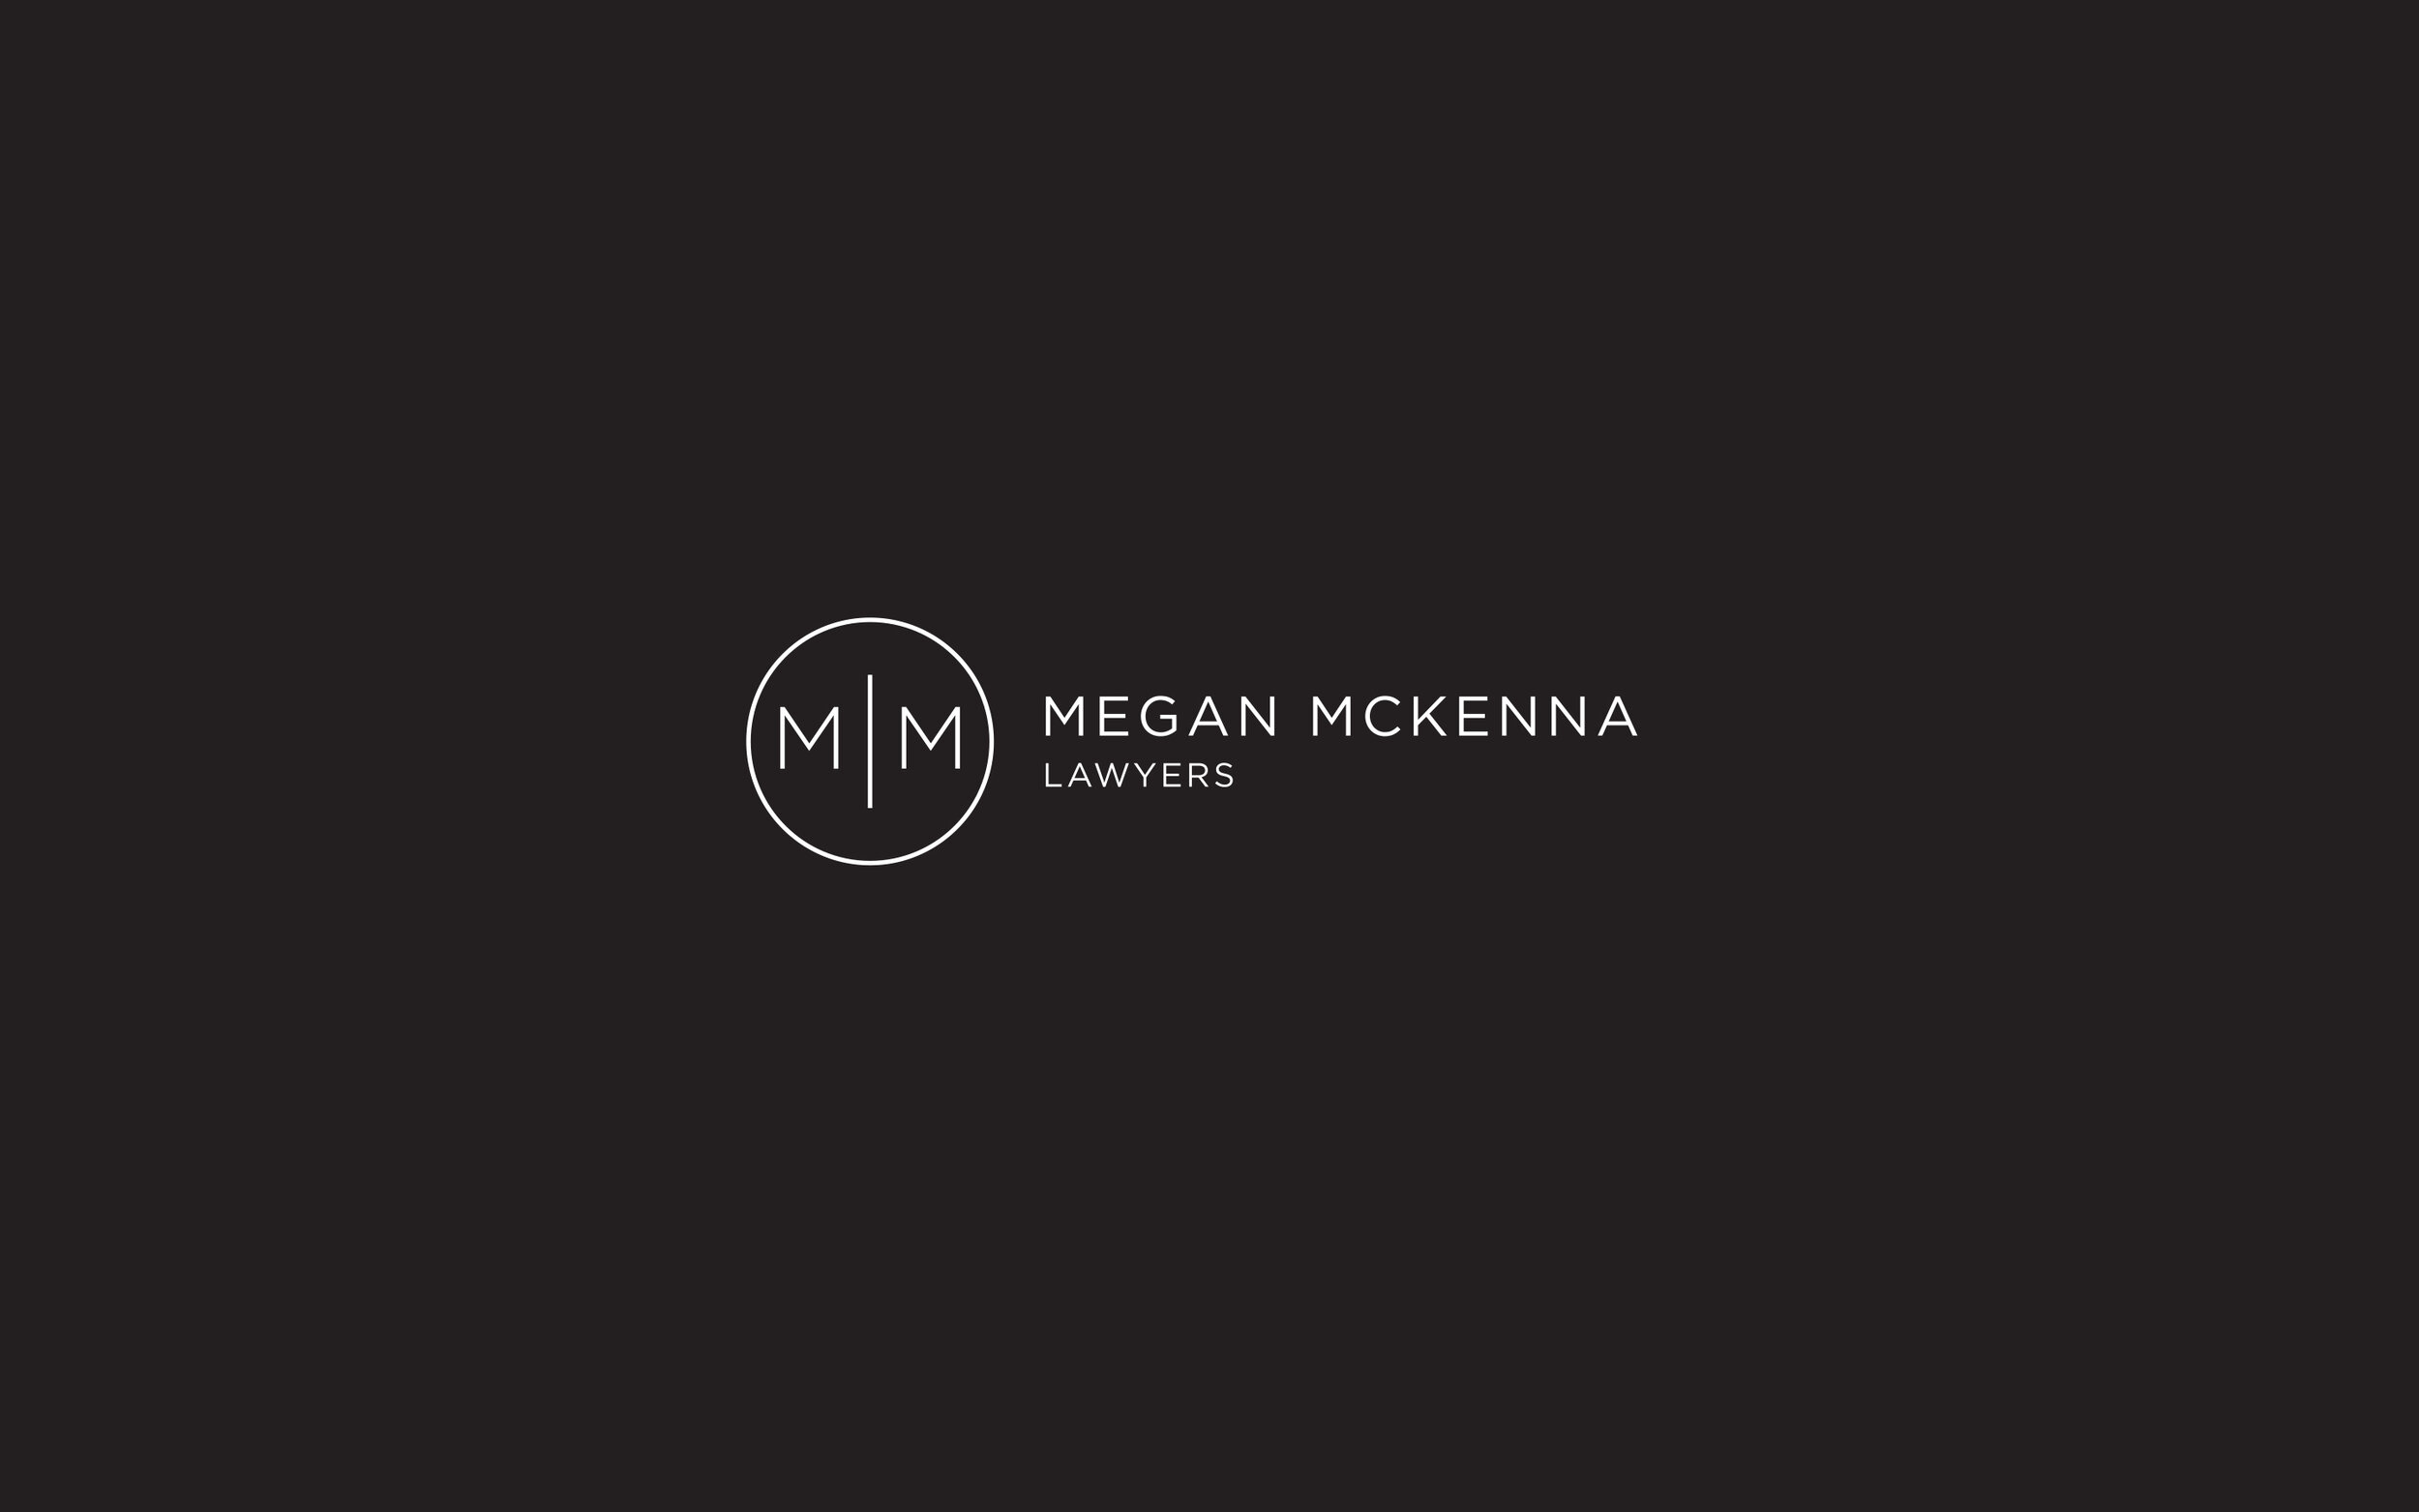 Company logo of Megan McKenna Lawyers